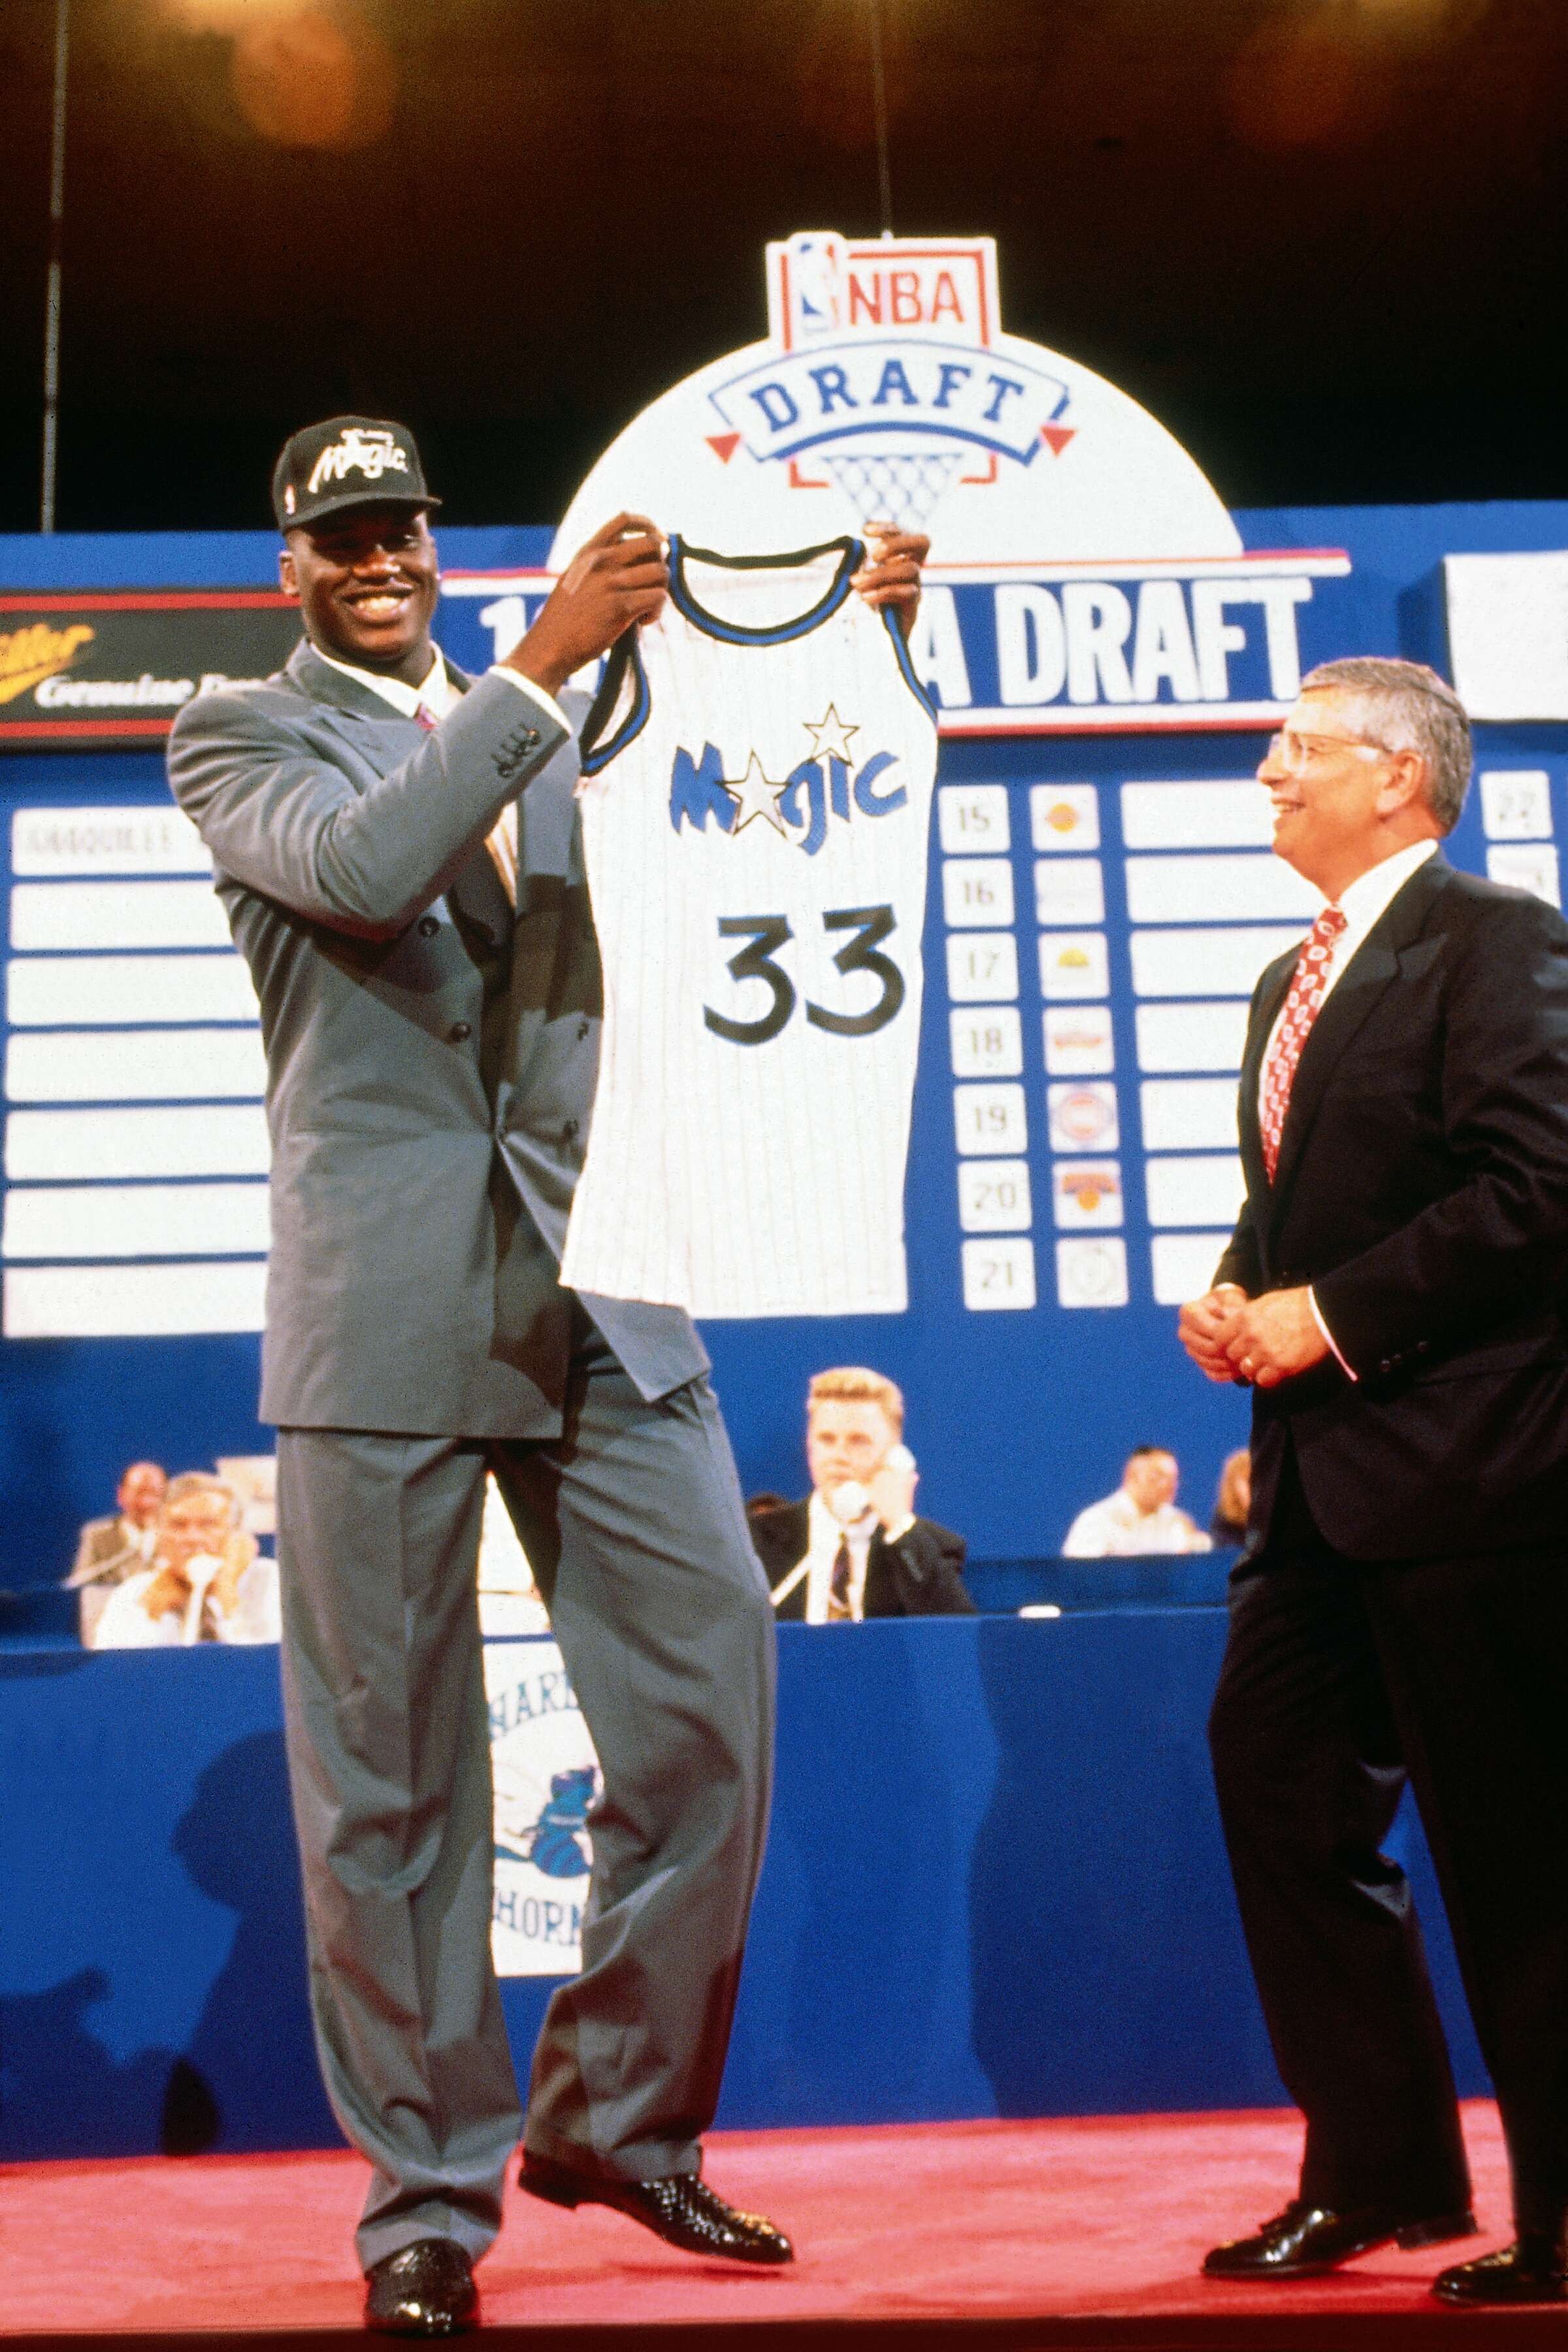 1992 NBA Draft - Orlando Magic first round draft choice Shaquille O’Neal